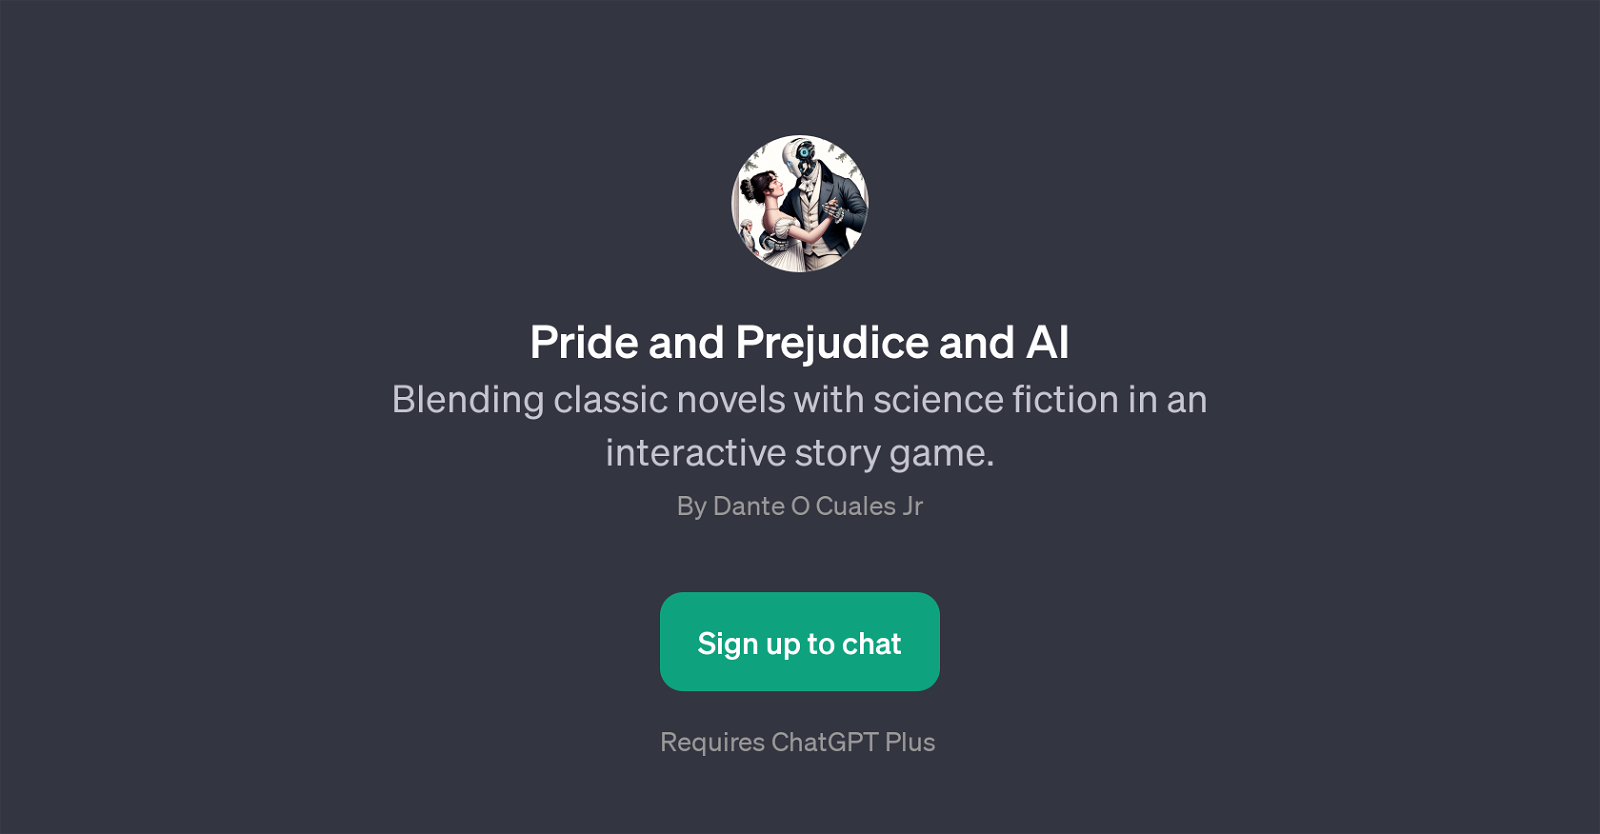 Pride and Prejudice and AI website